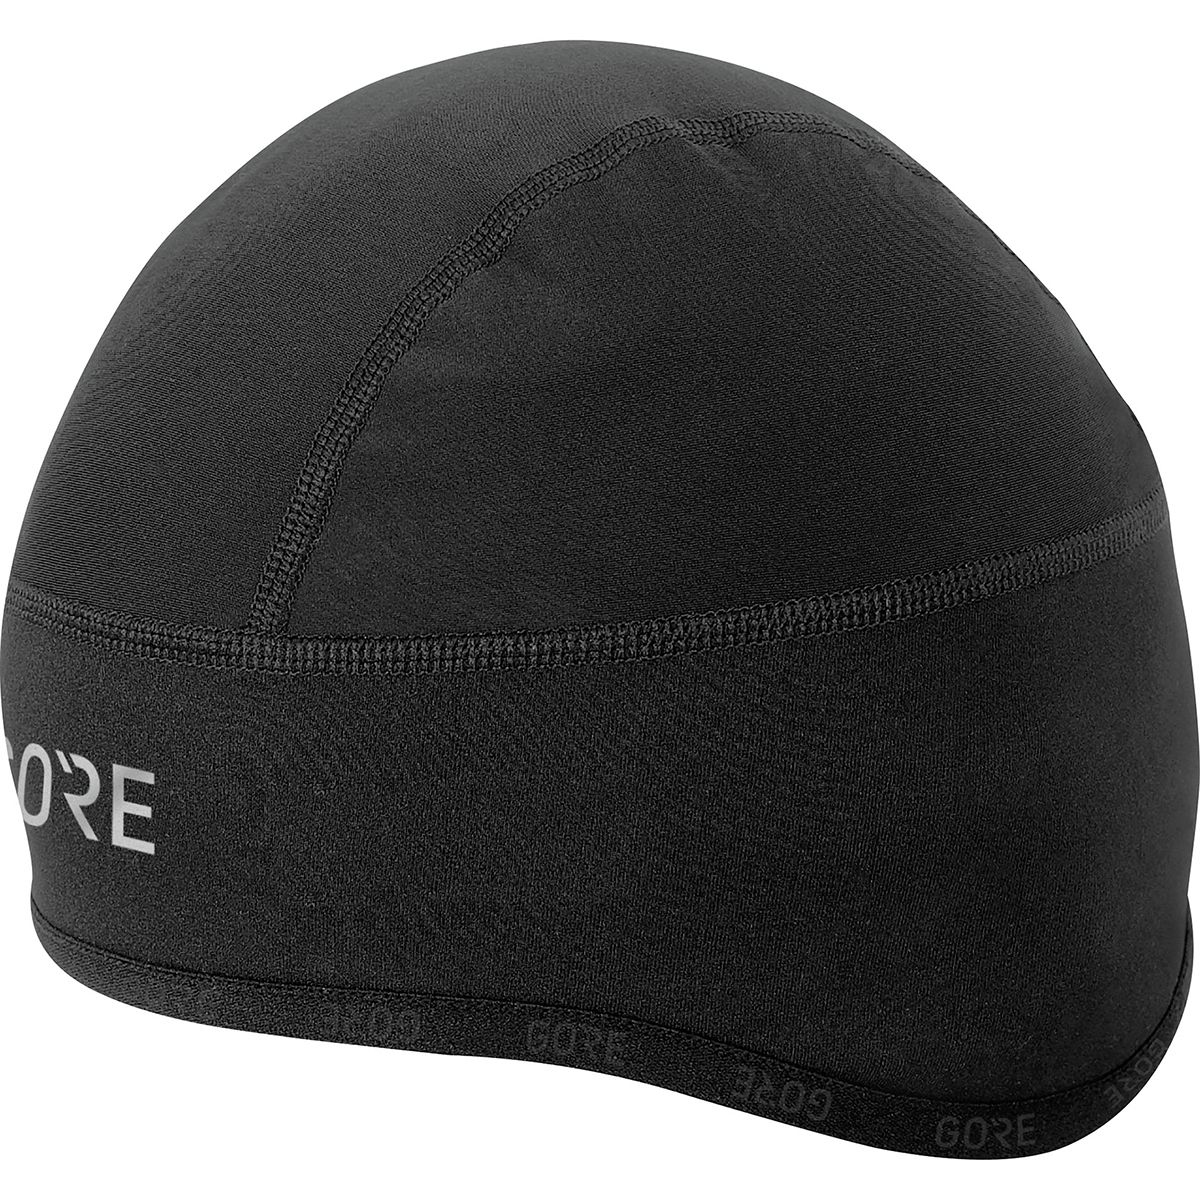 Gore Wear C3 Gore Windstopper Helmet Cap